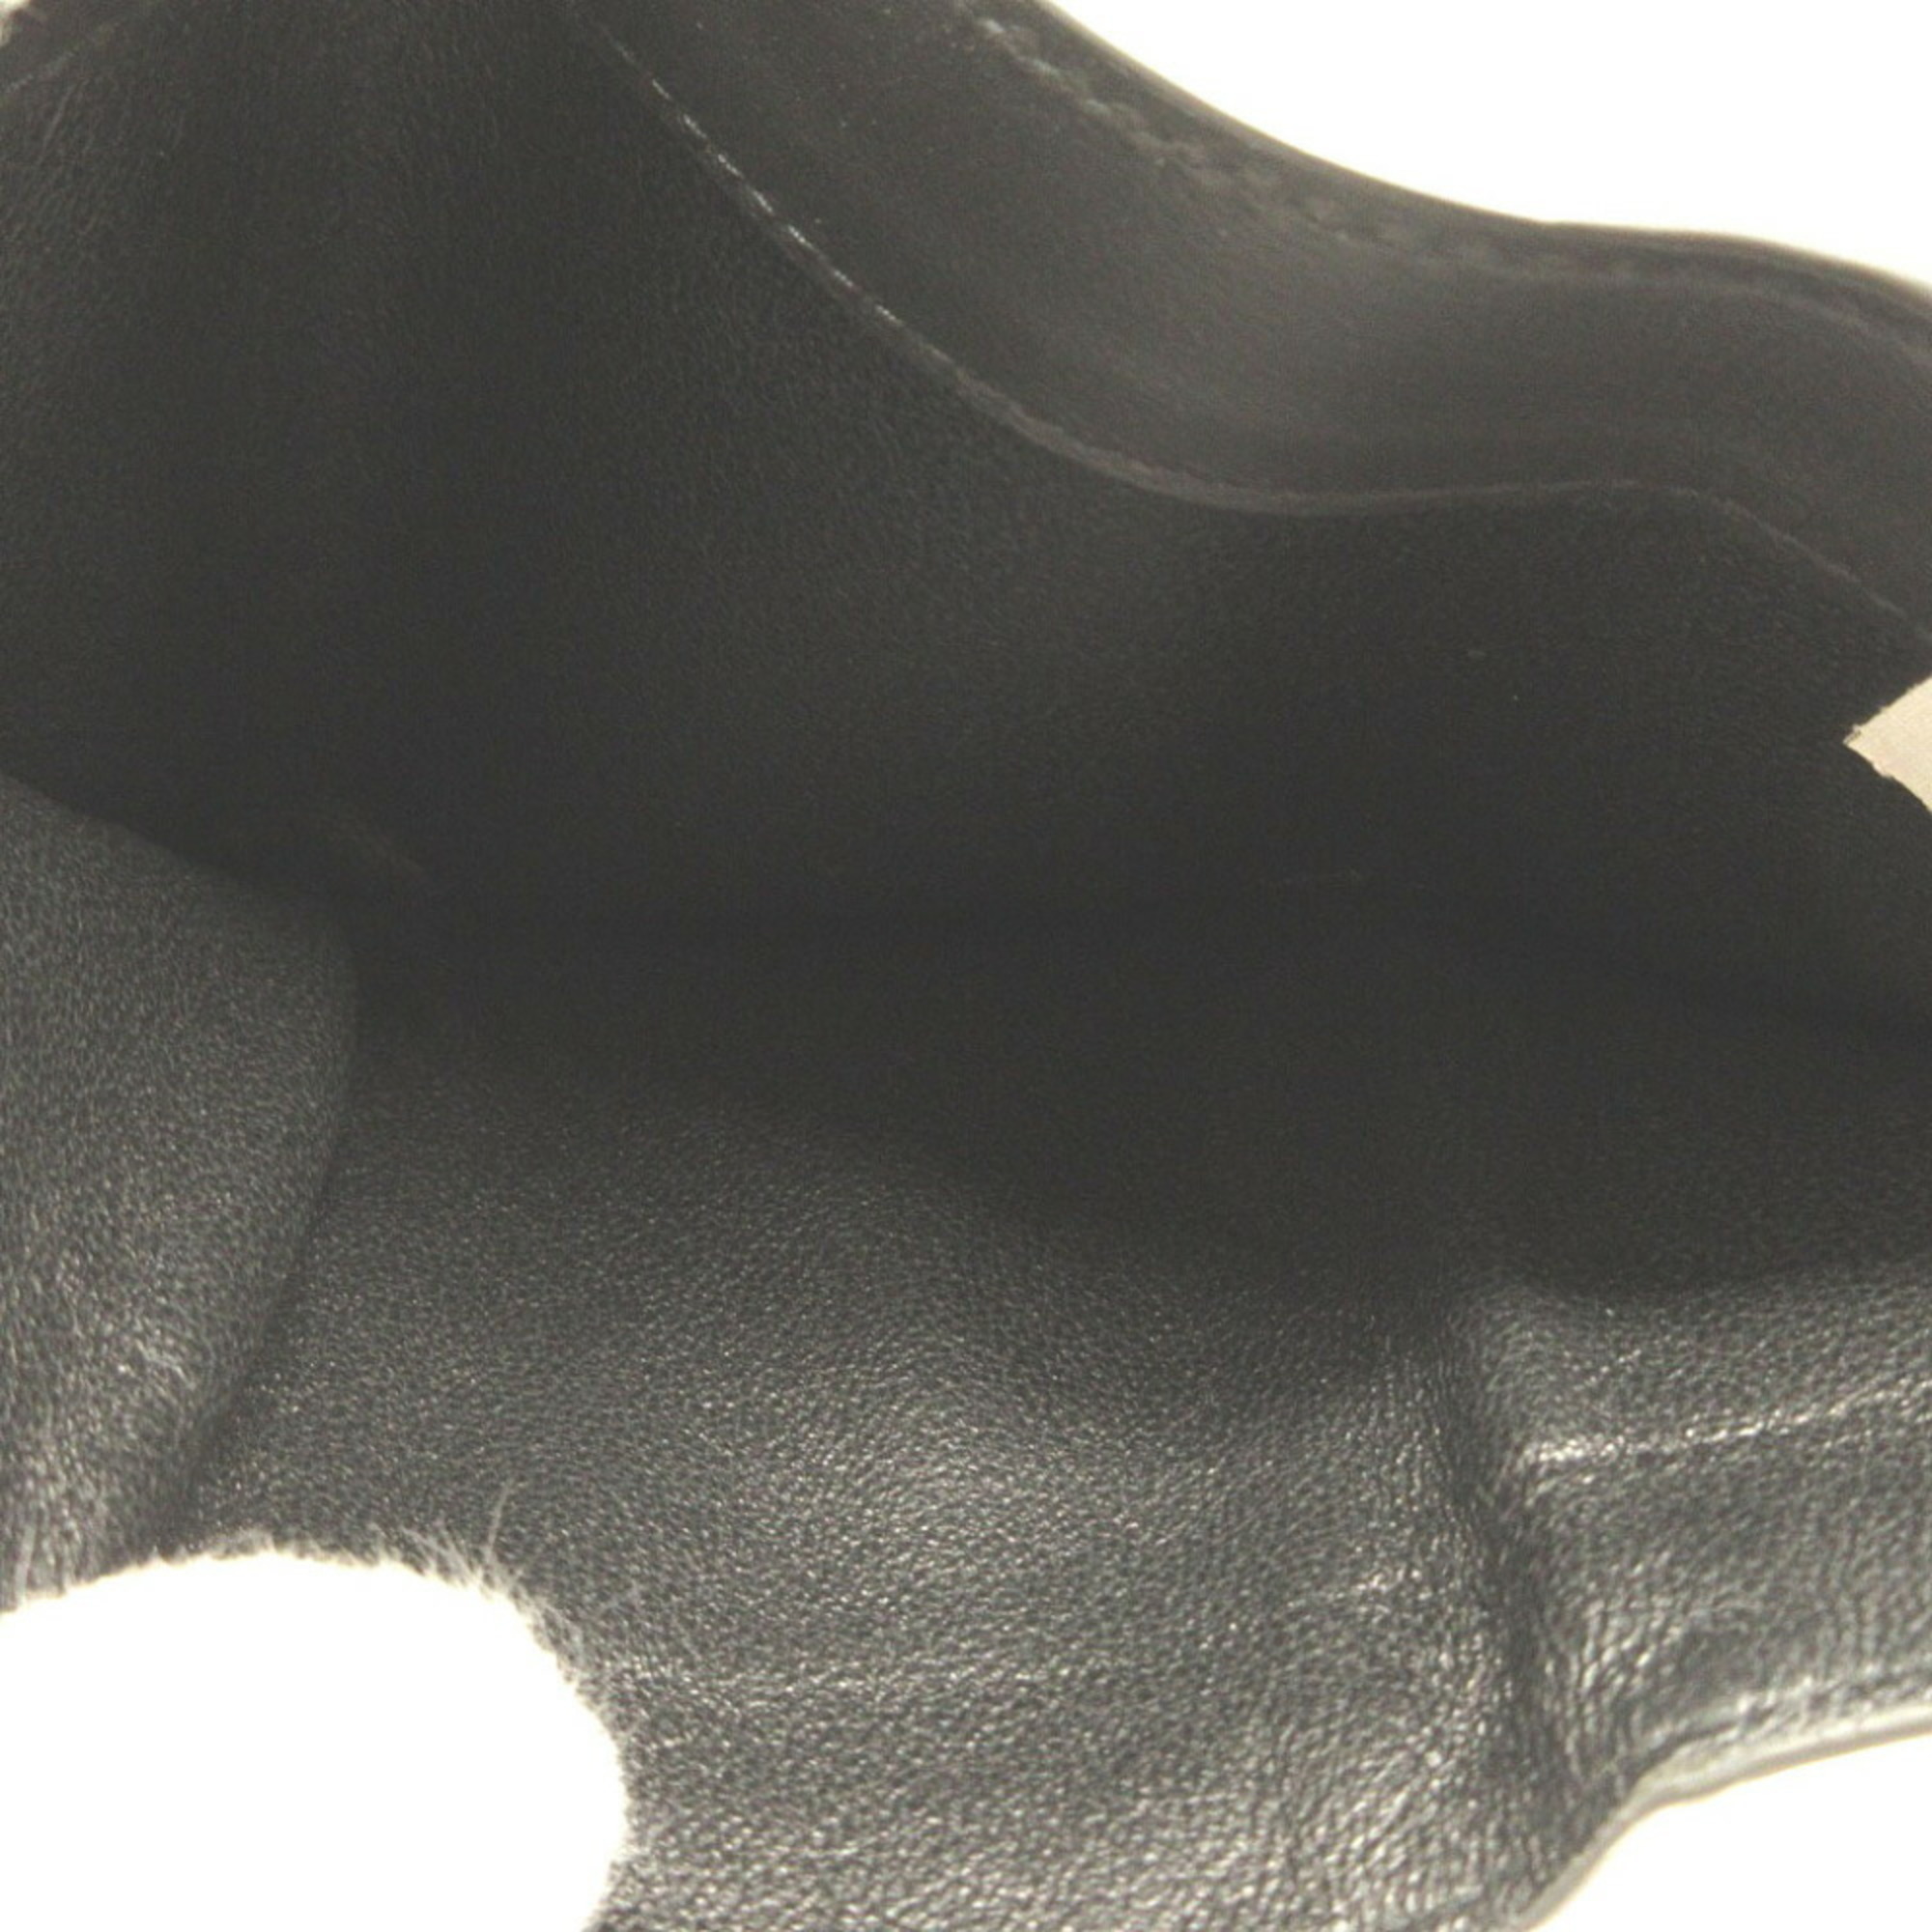 Bottega Veneta Intrecciato Leather Black Gray Trifold Wallet